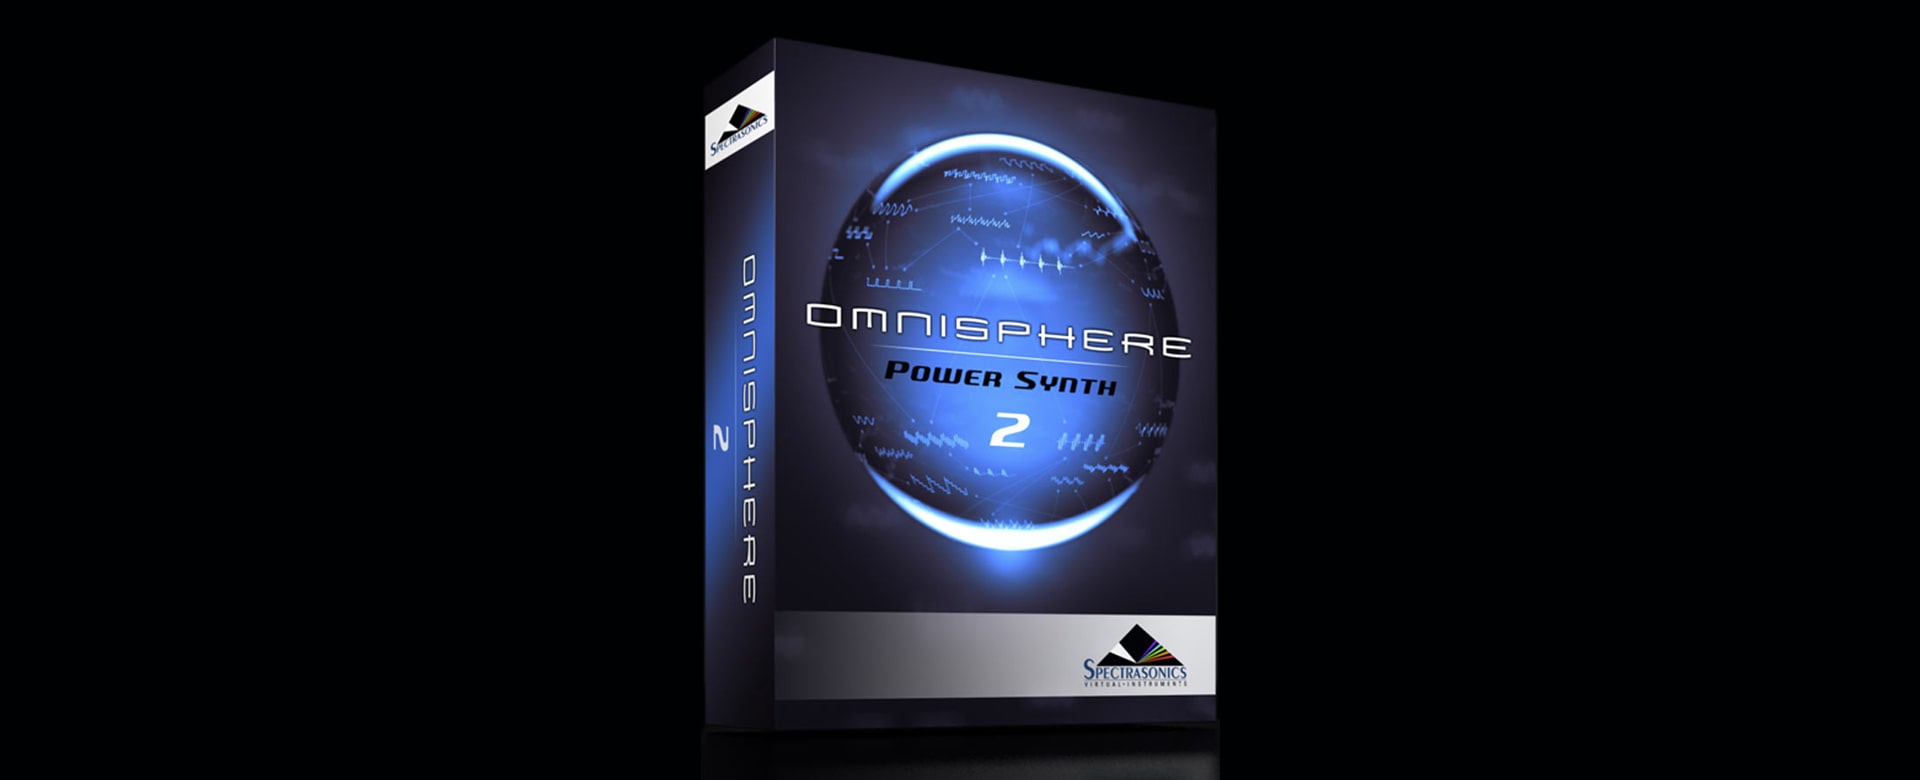 Omnisphere 2.7.2 Latest Cracked 2021 {Free Download} Latest Version